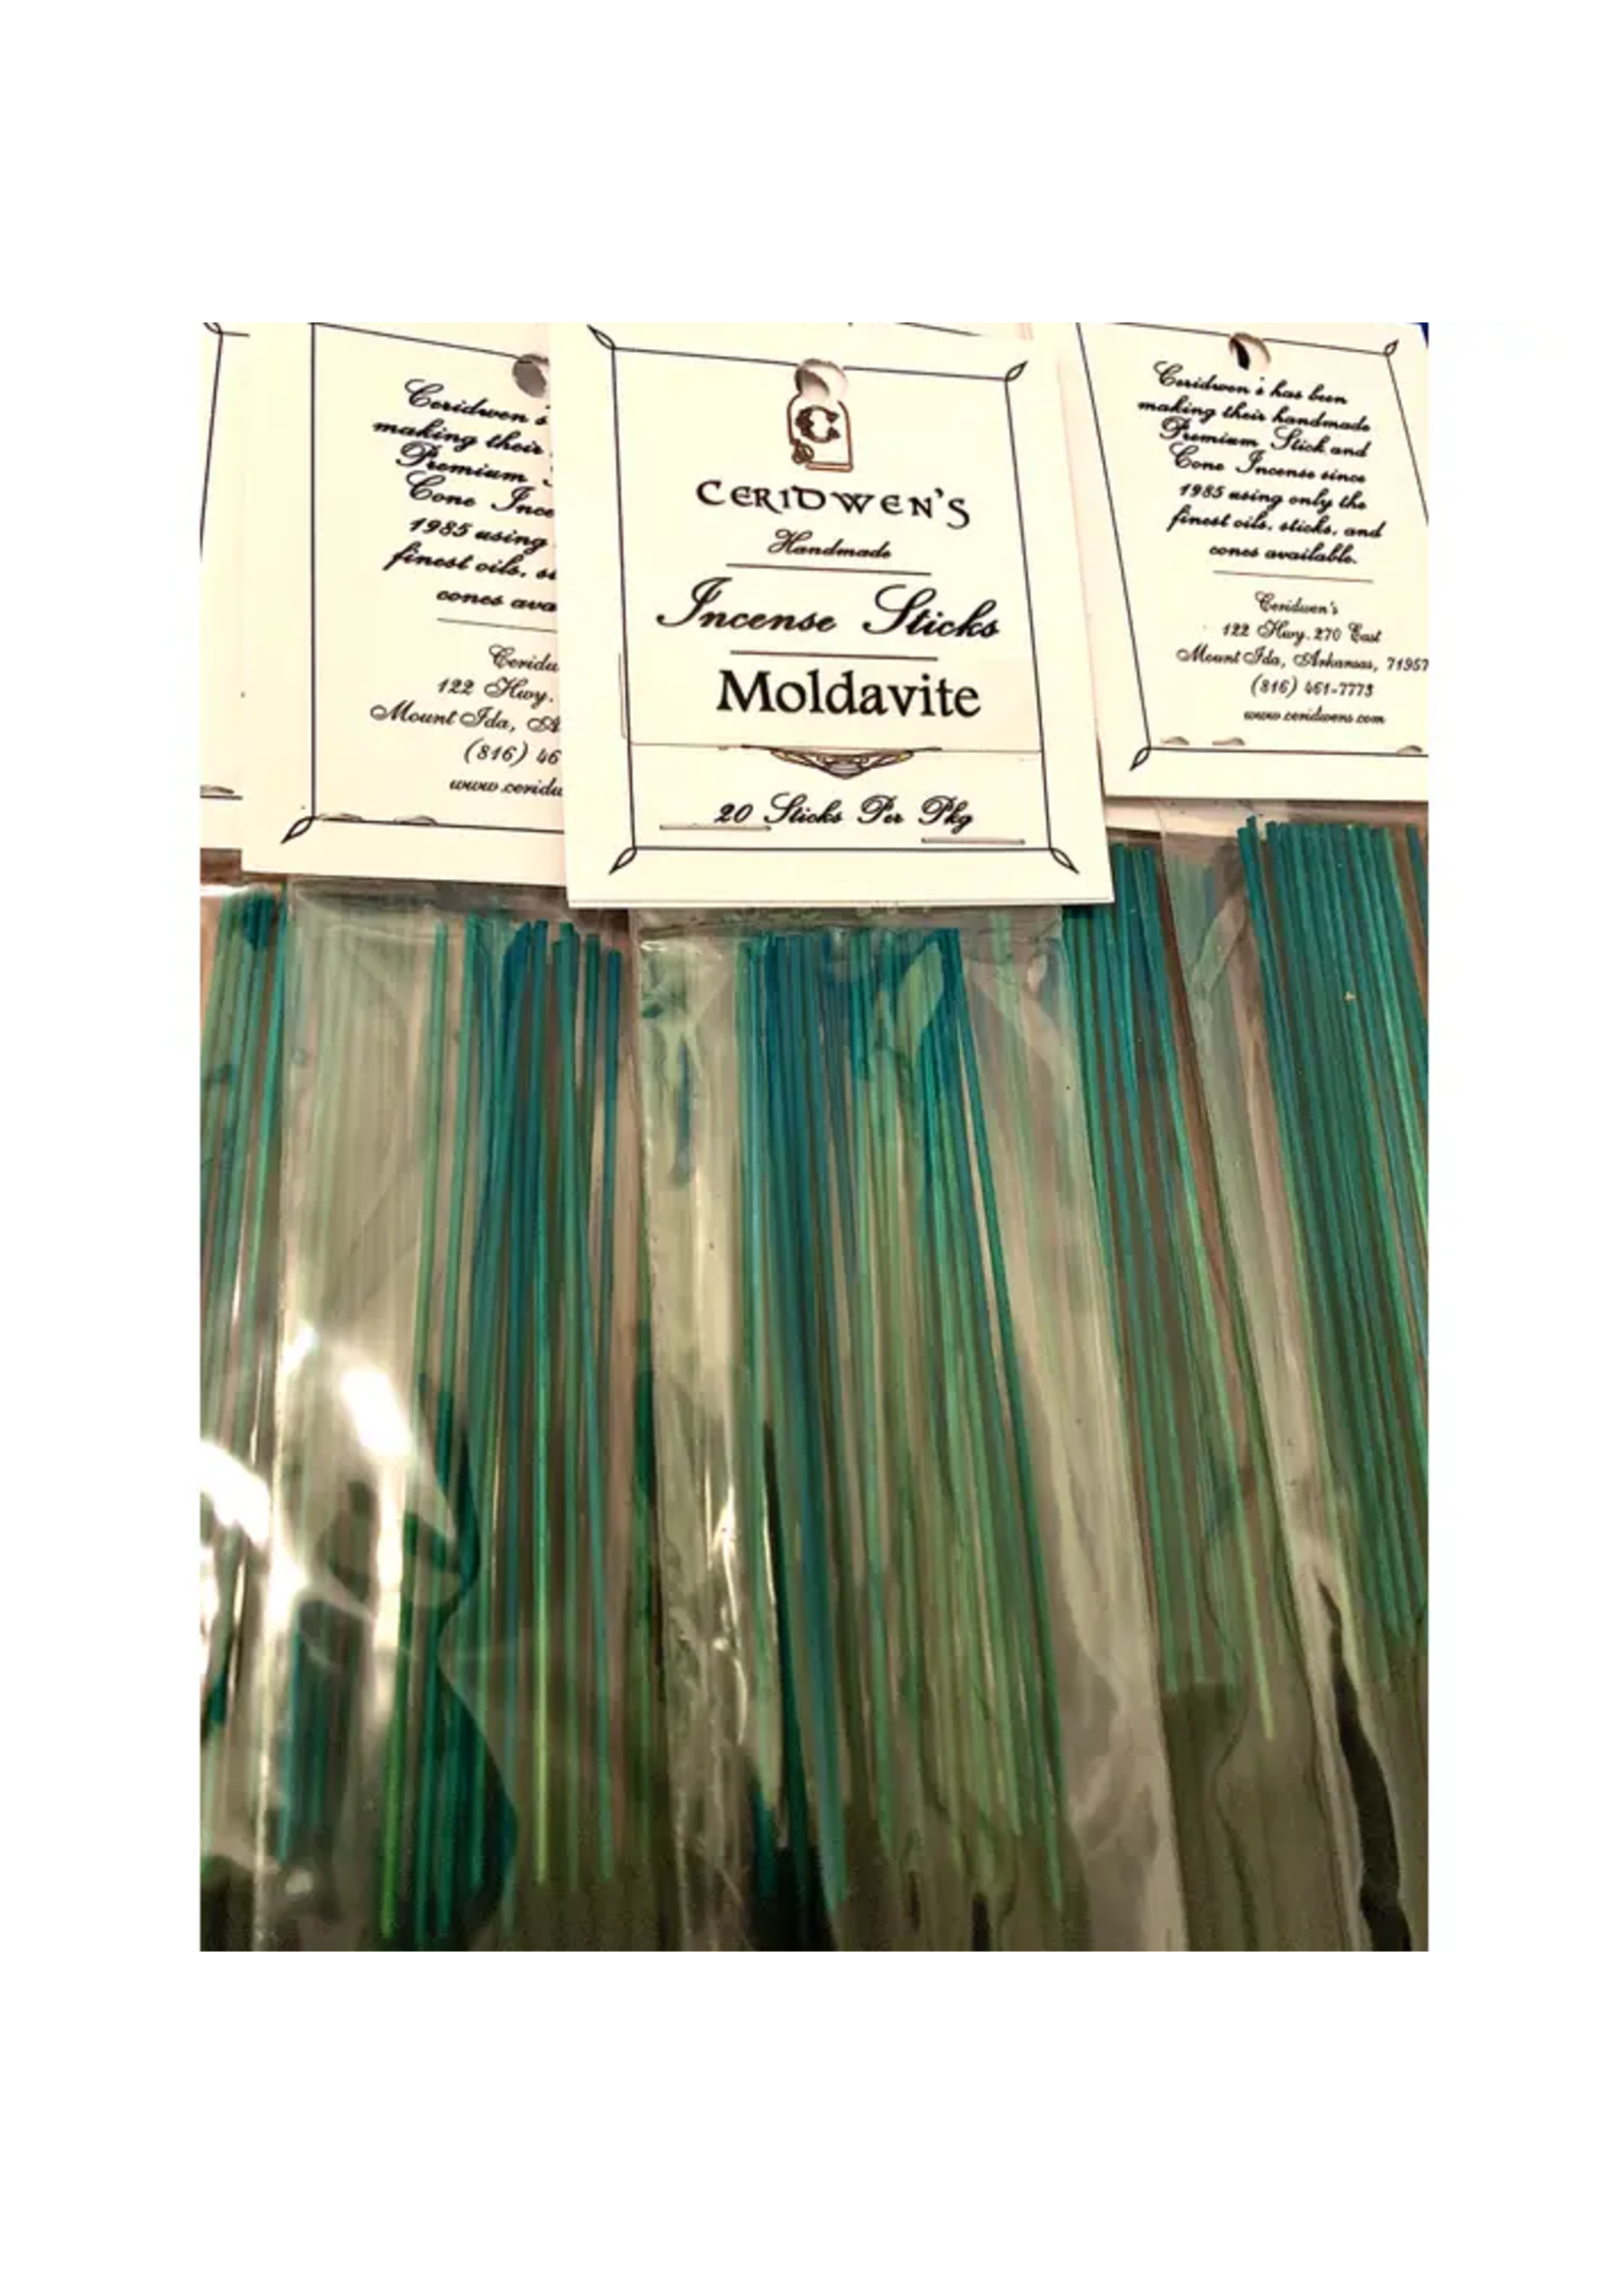 Ceridwen's Moldavite Incense Sticks